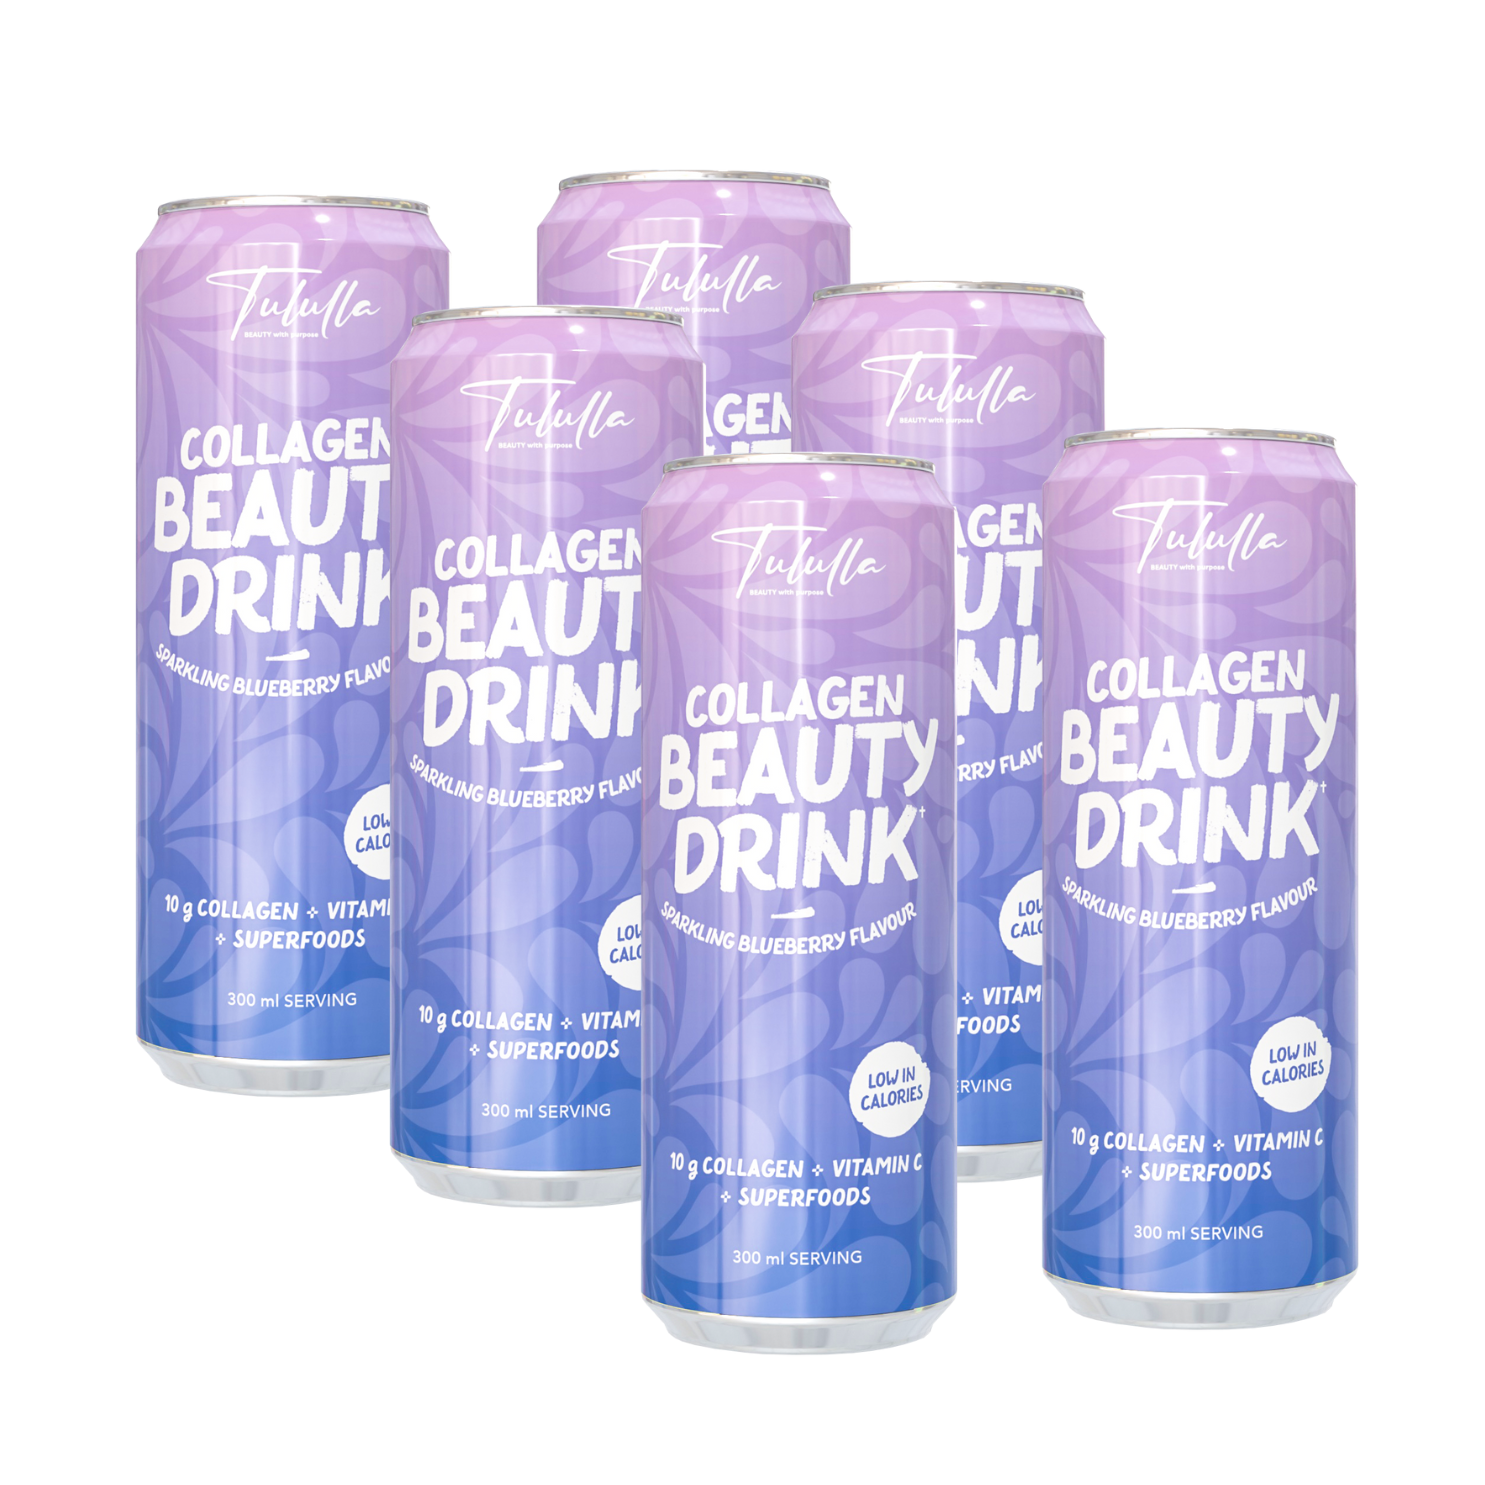 6_sparkling_collagen_beauty_drinks